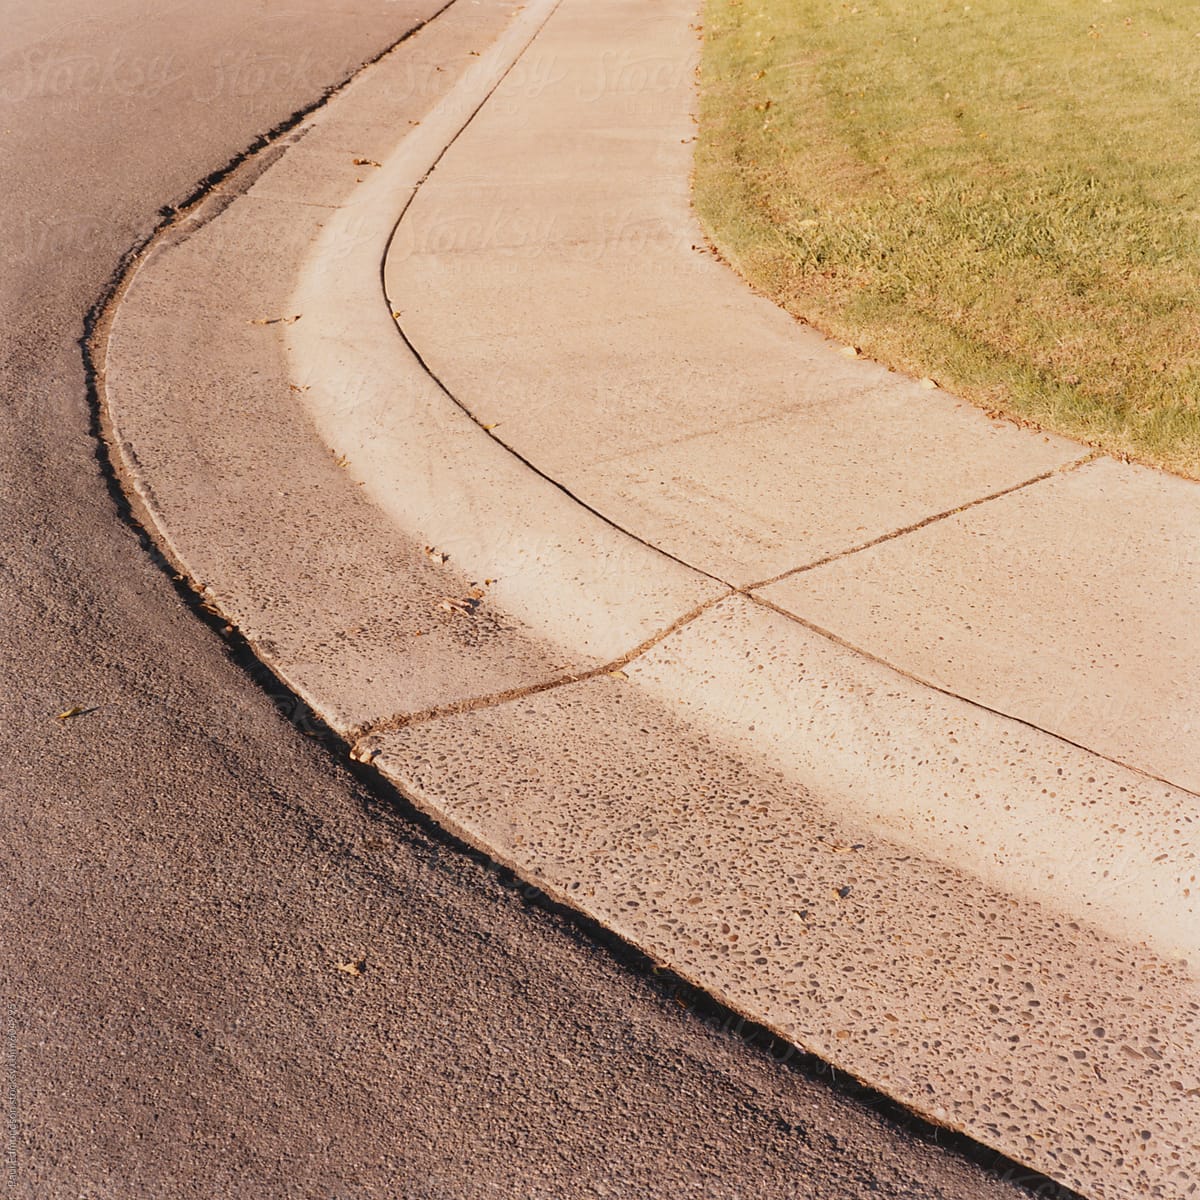 Detail of curving sidewalk along urban street